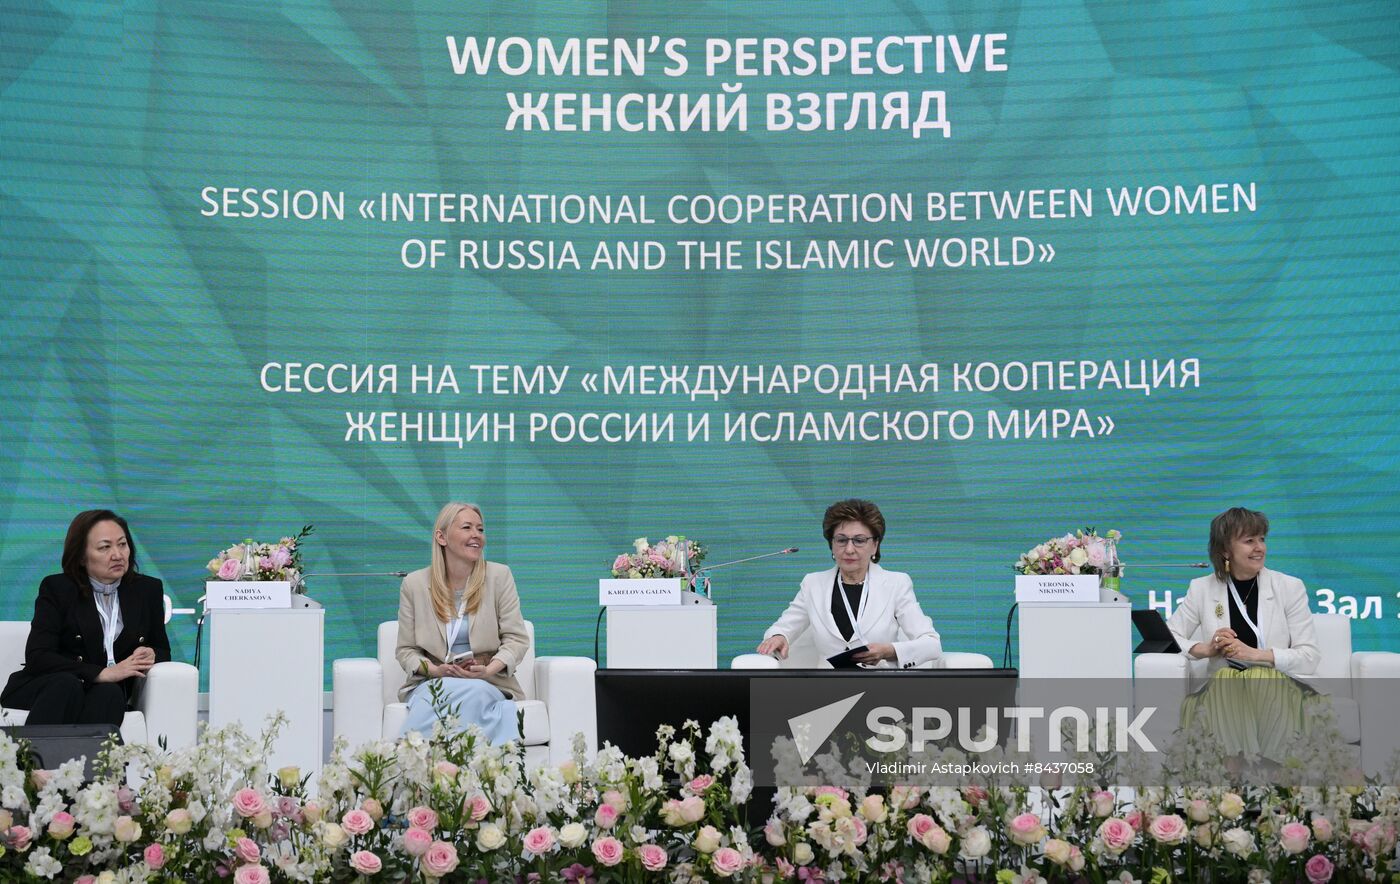 KAZANFORUM 2023. International Cooperation between Women of Russia and Islamic World